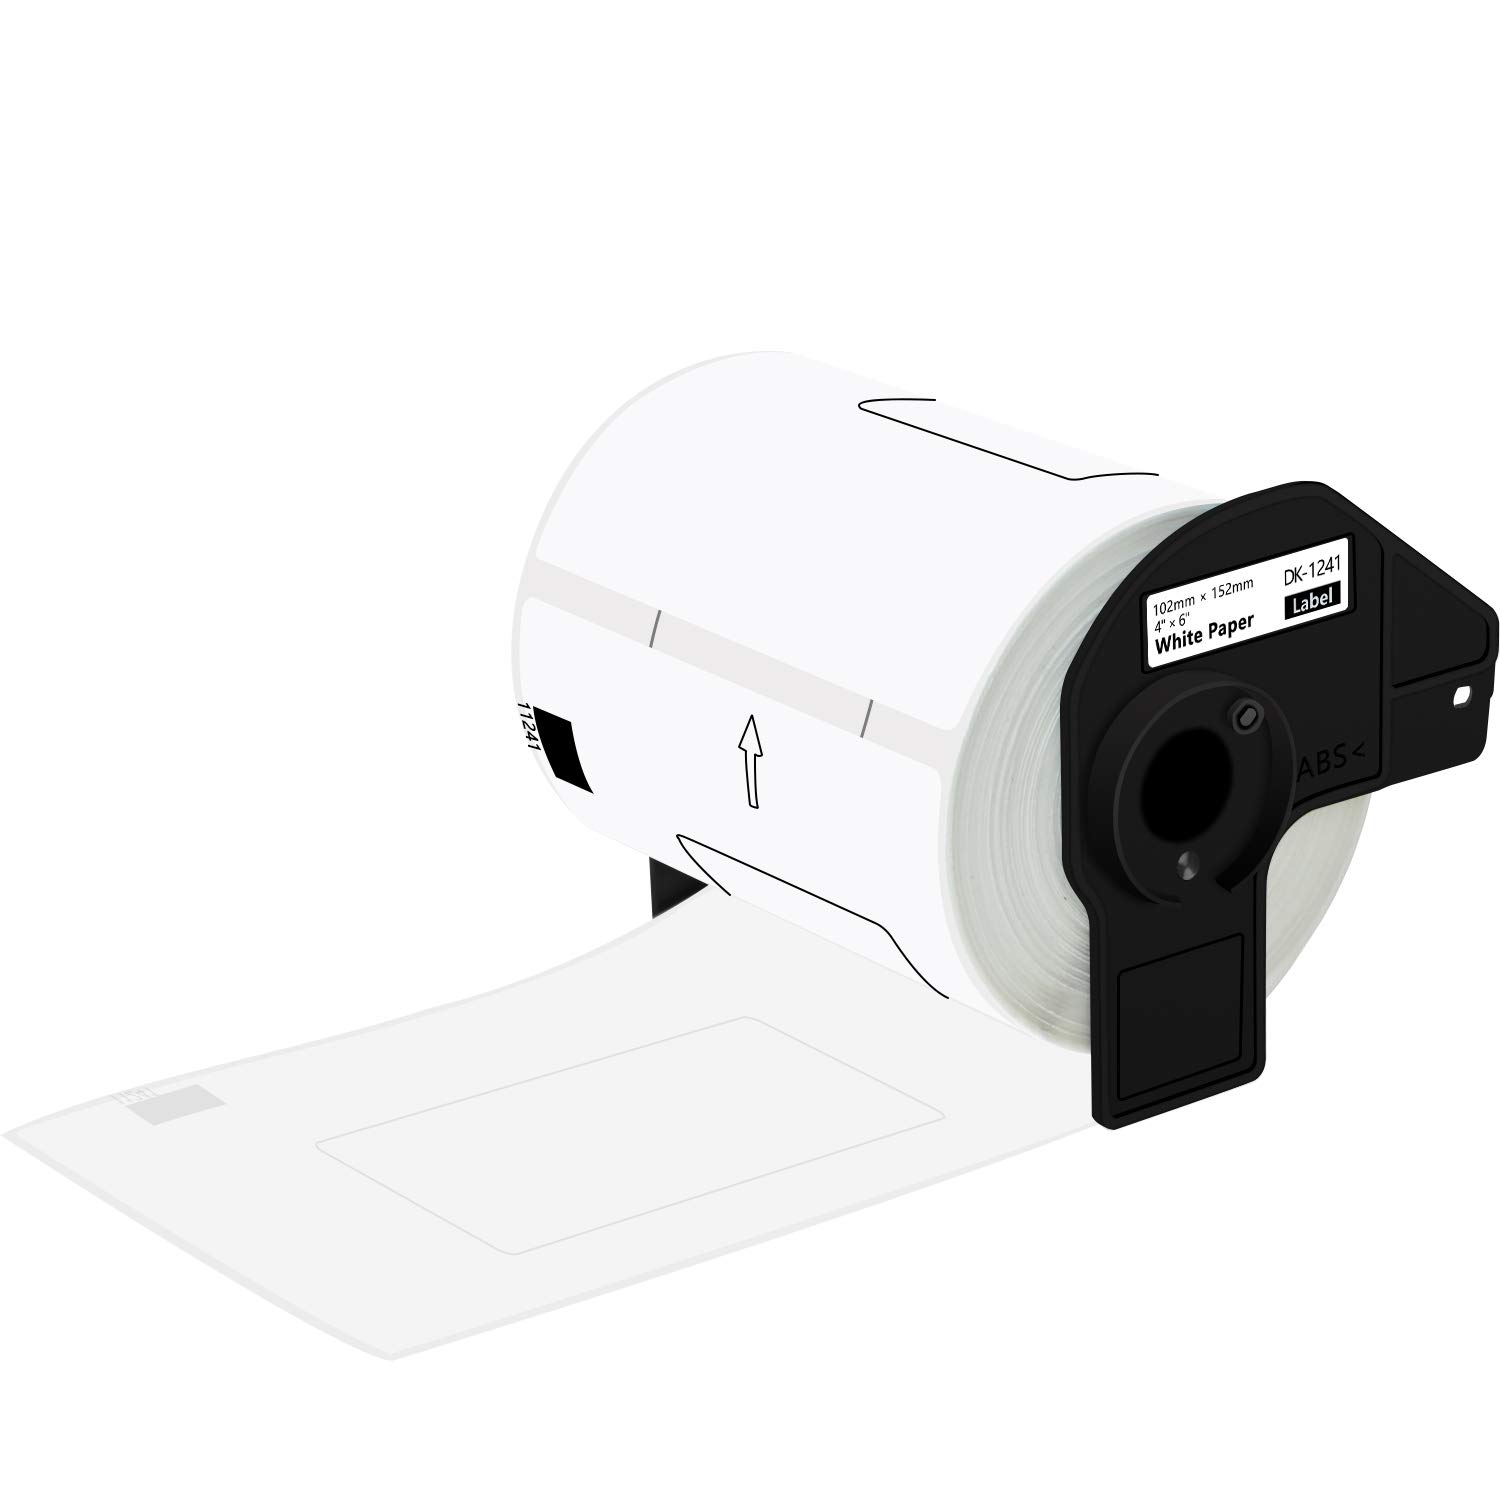 Etiqueta blanca de papel Brother DK1241 - 180 etiquetas de 101 mm de ancho x 152 mm de largo. Impresión en negro. QL1110NWB.